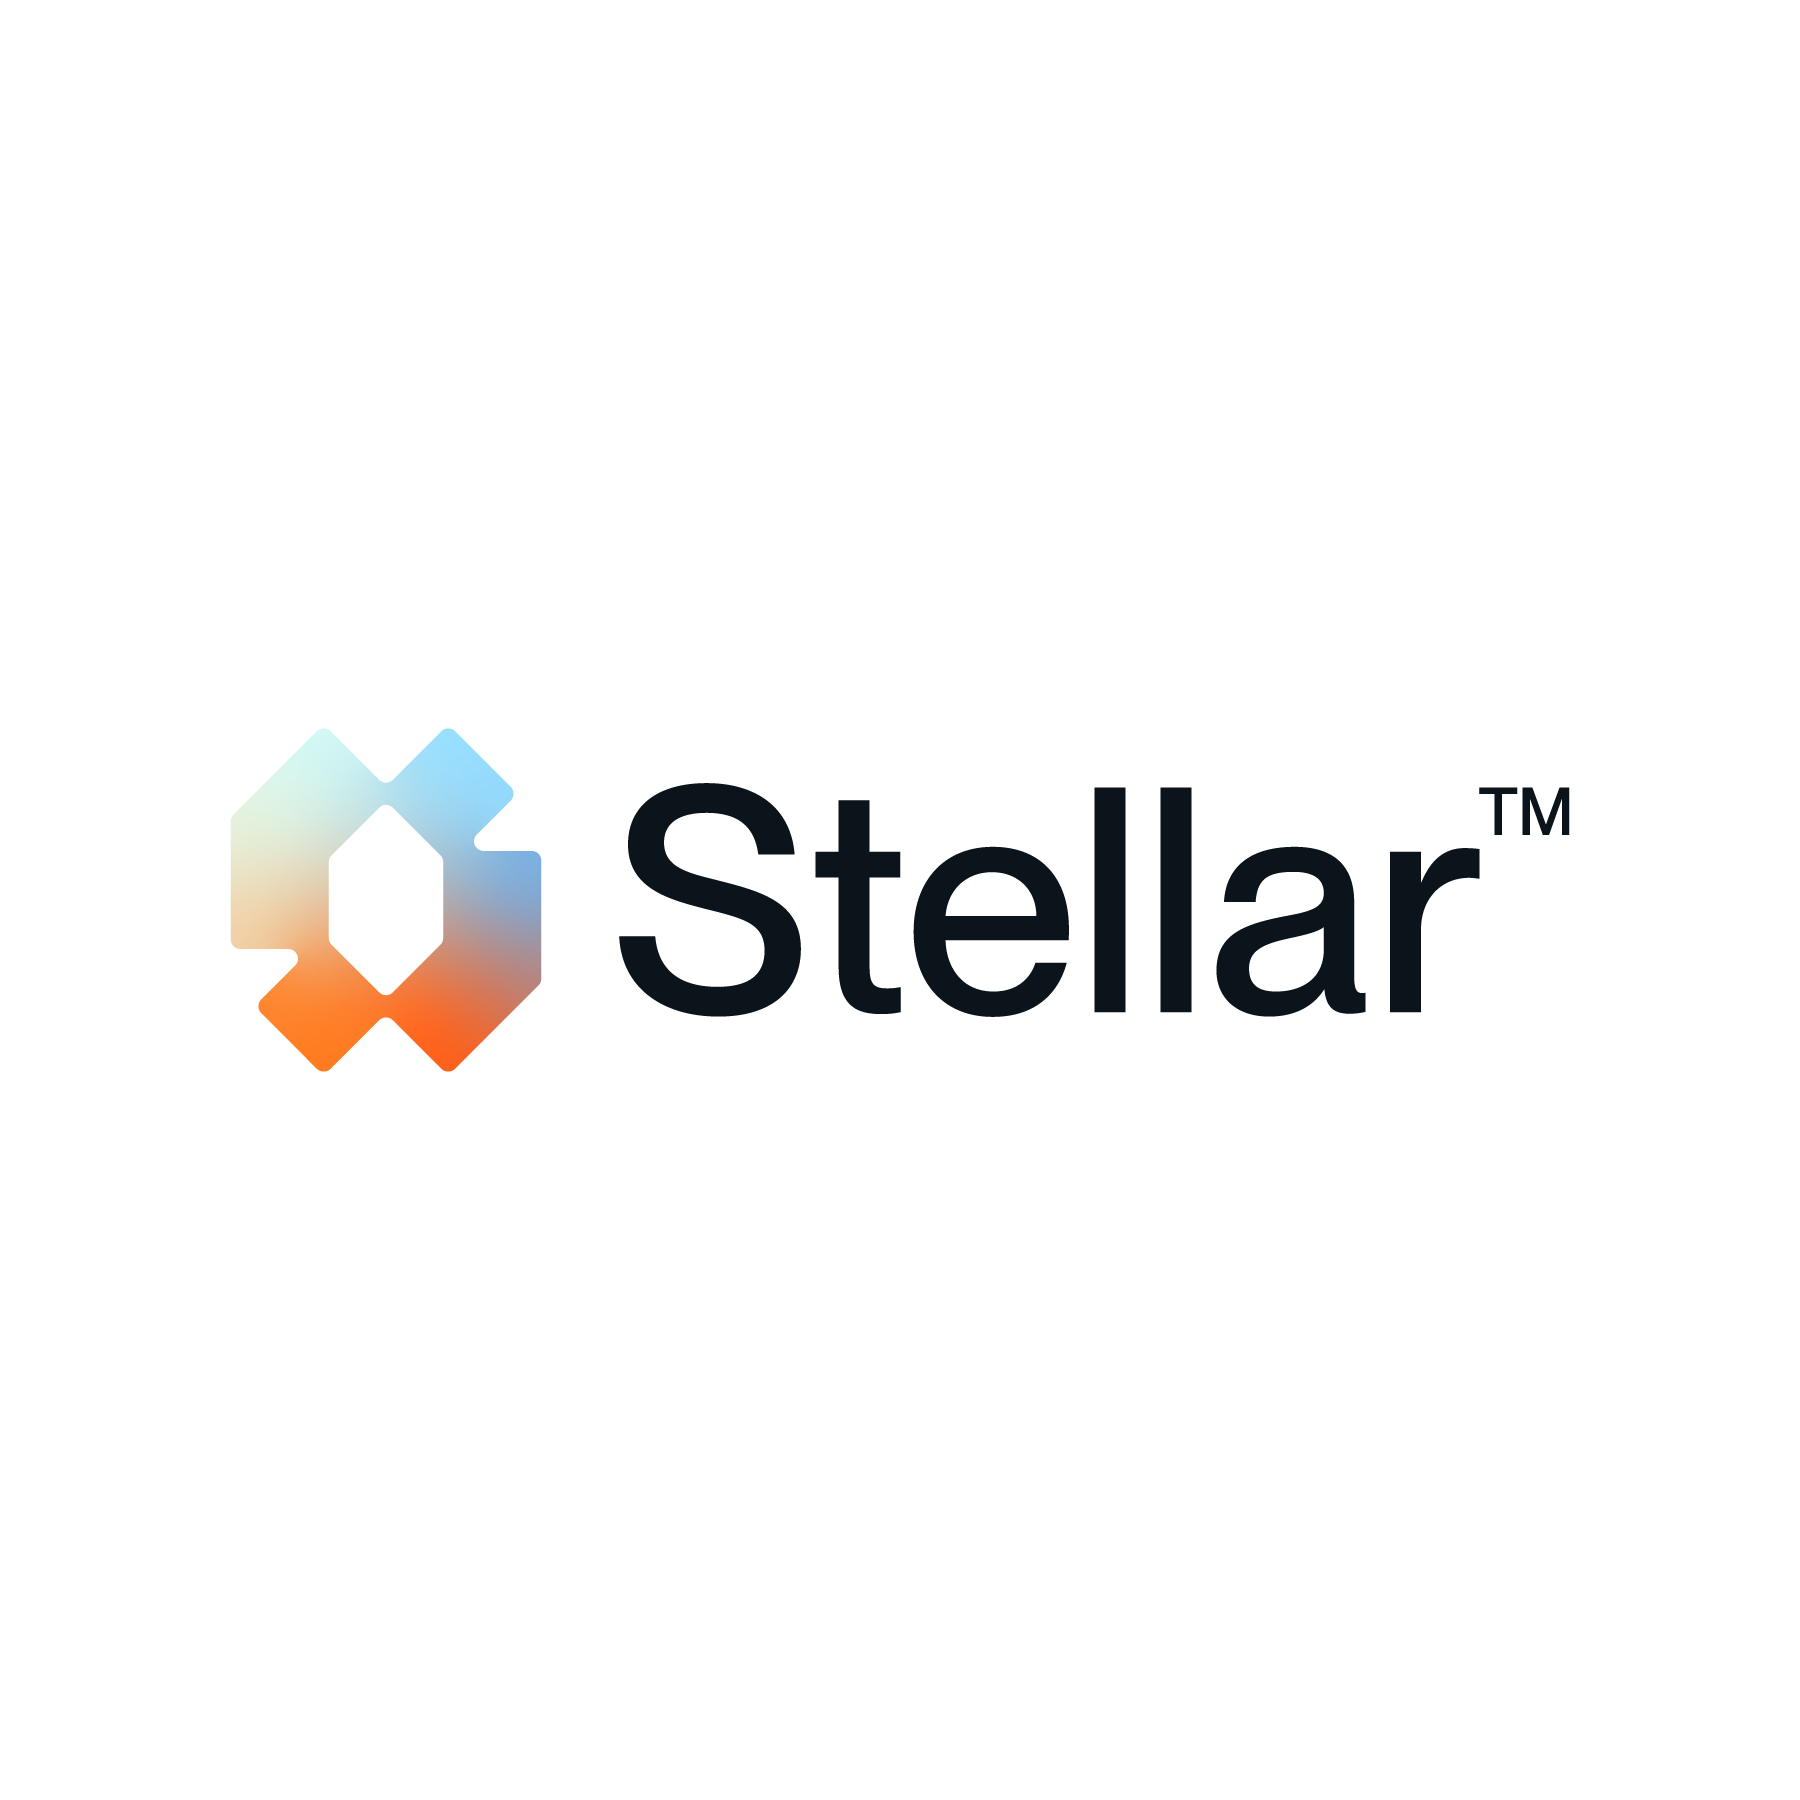 Stellar Logo logo design by logo designer Jeroen van Eerden for your inspiration and for the worlds largest logo competition